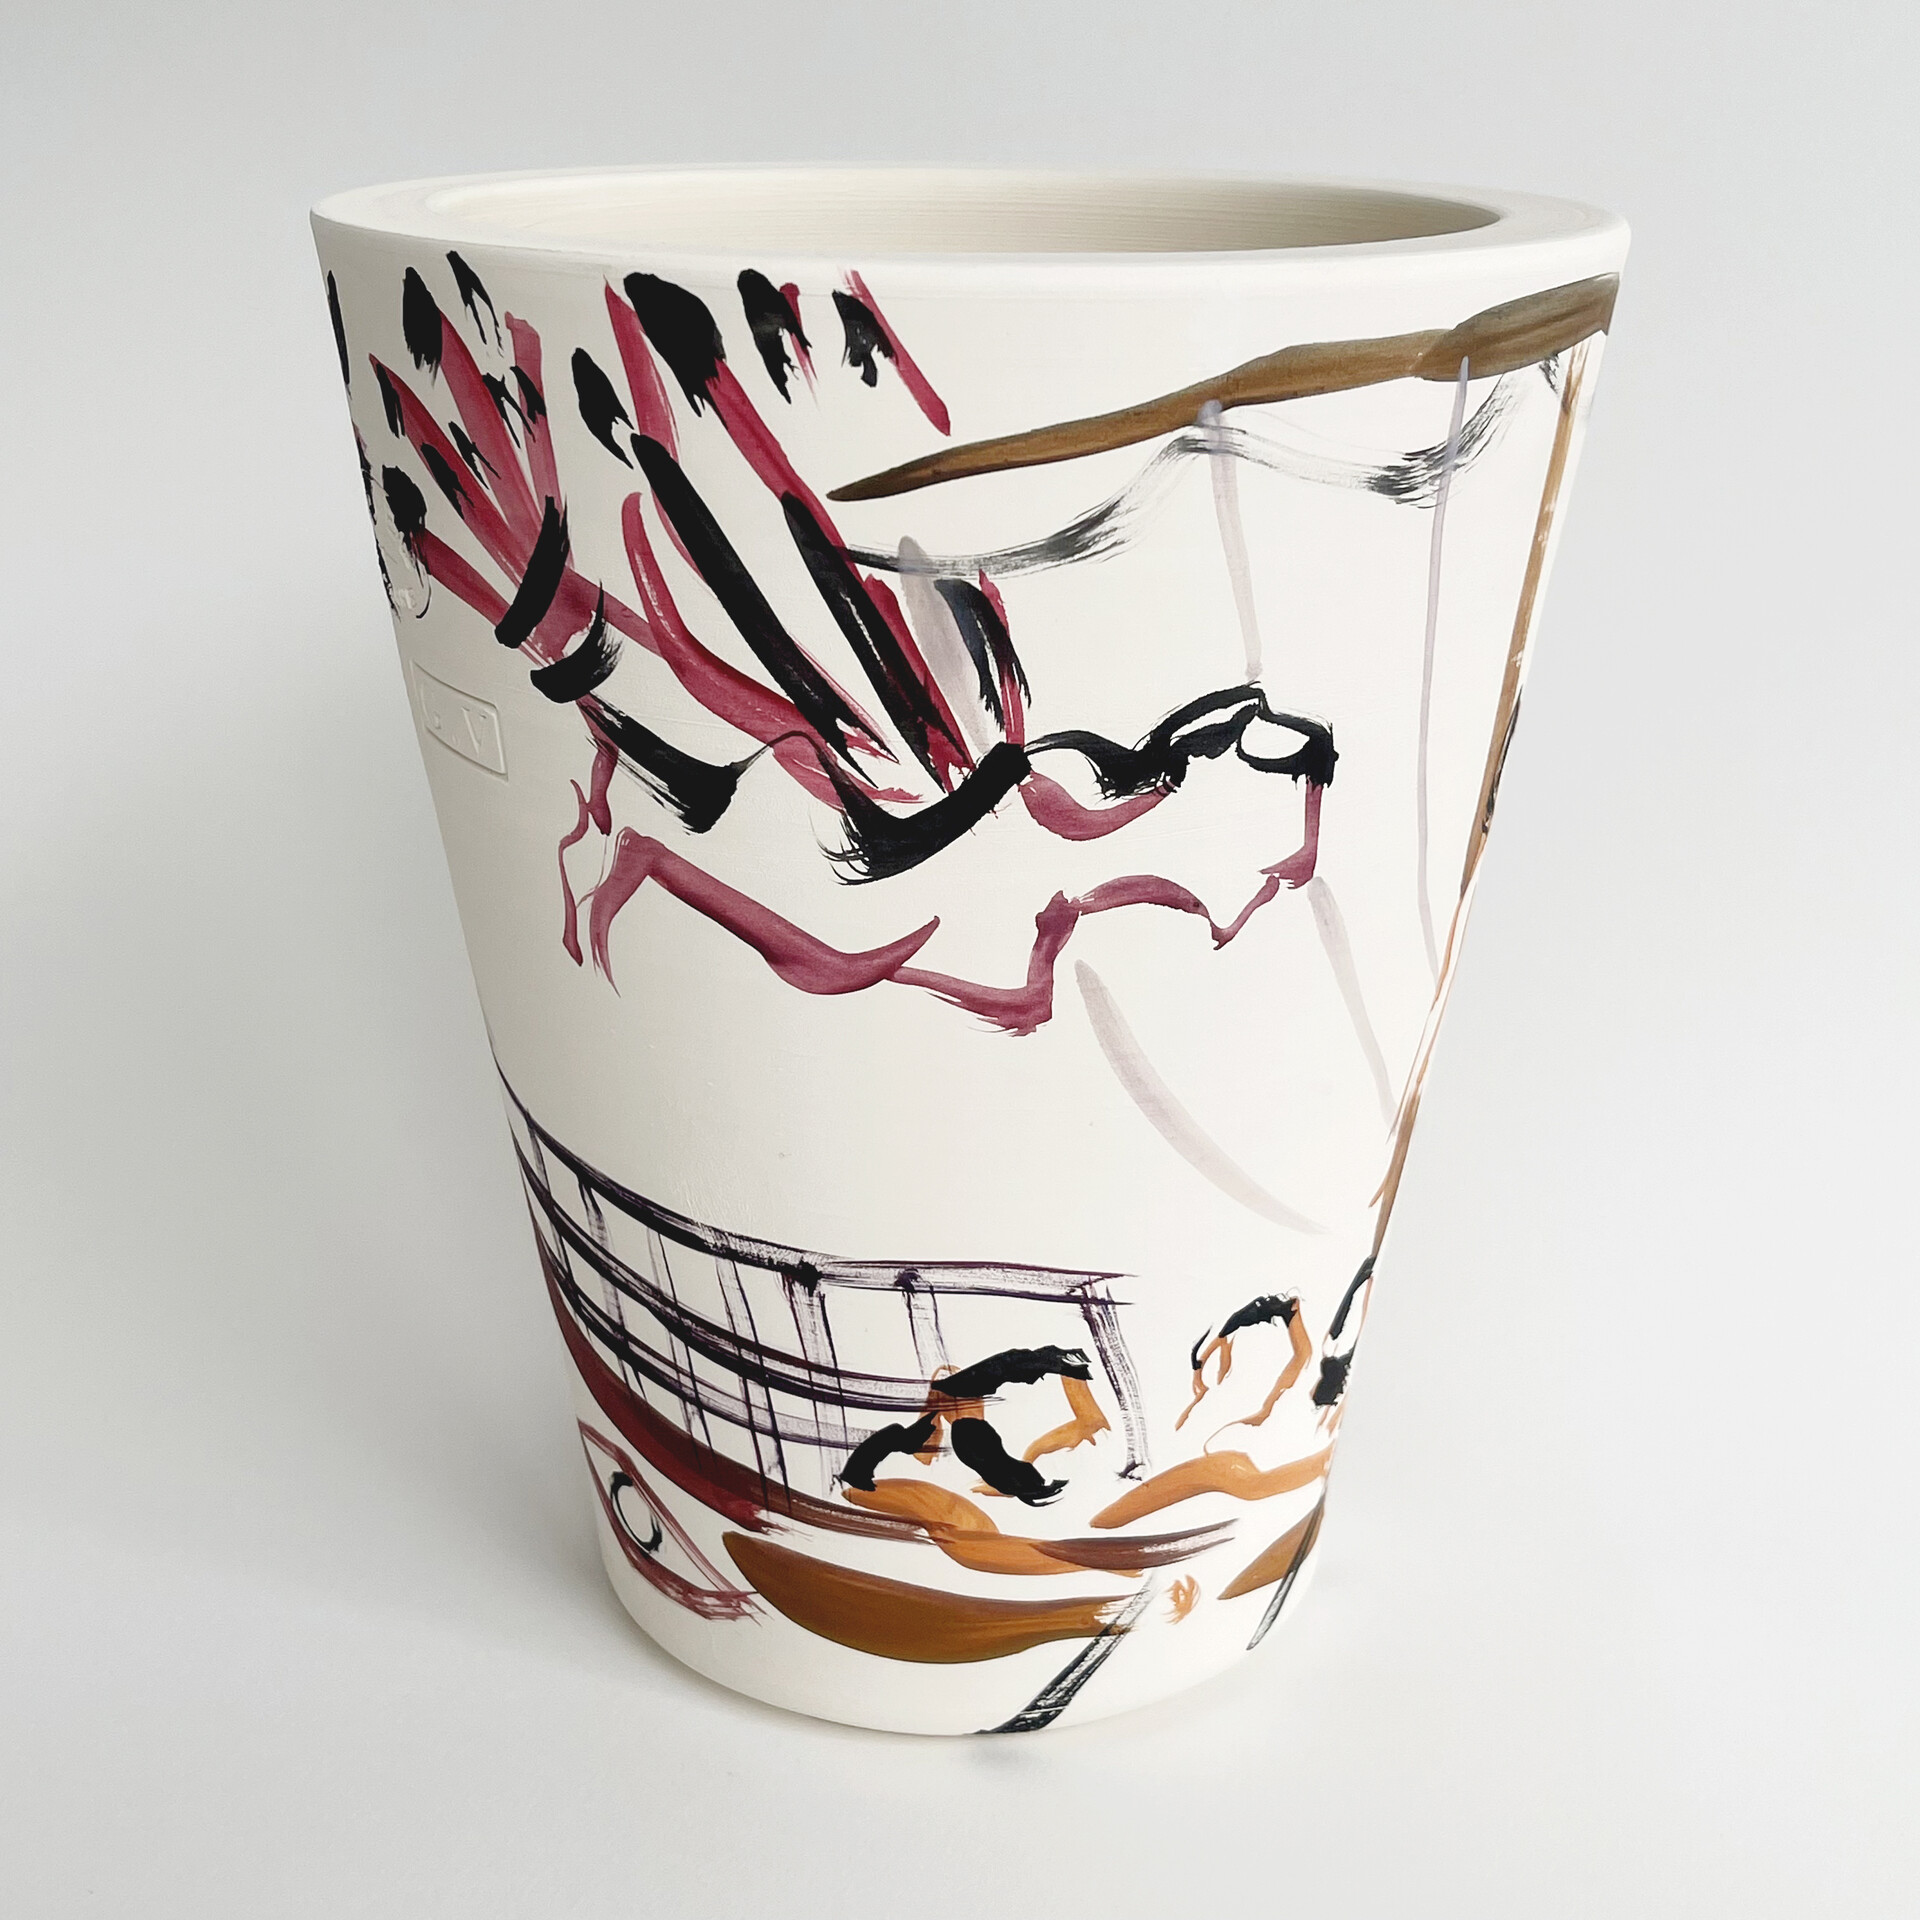 “Odysseus and Sirens”, 2021, oil paint on ceramics, 19,5 x 18, 5 cm